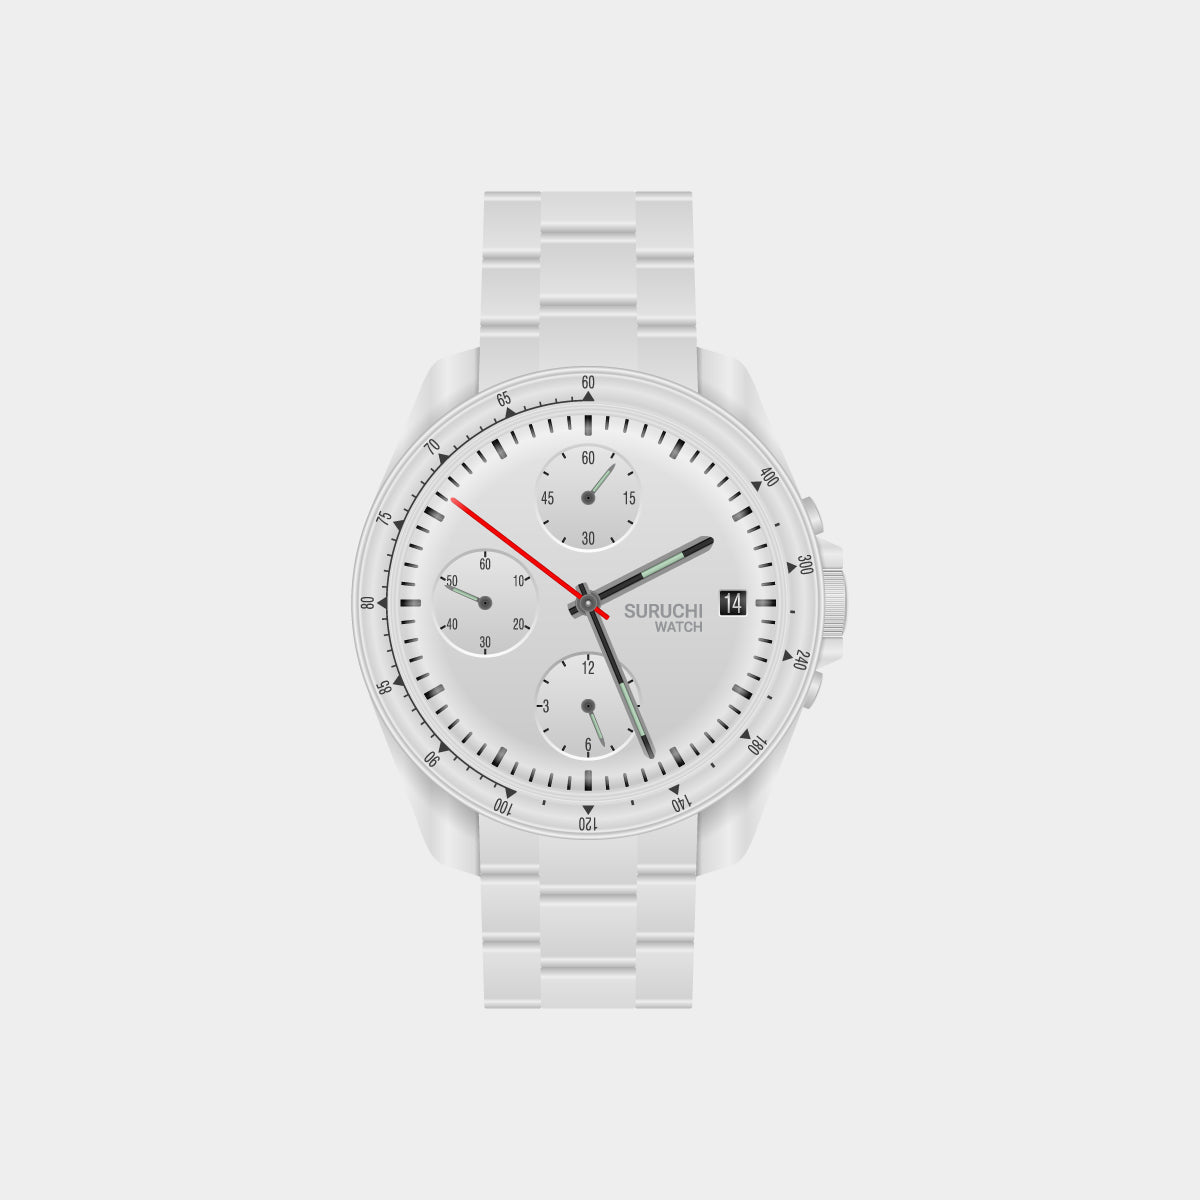 The Luxury Enigma watch